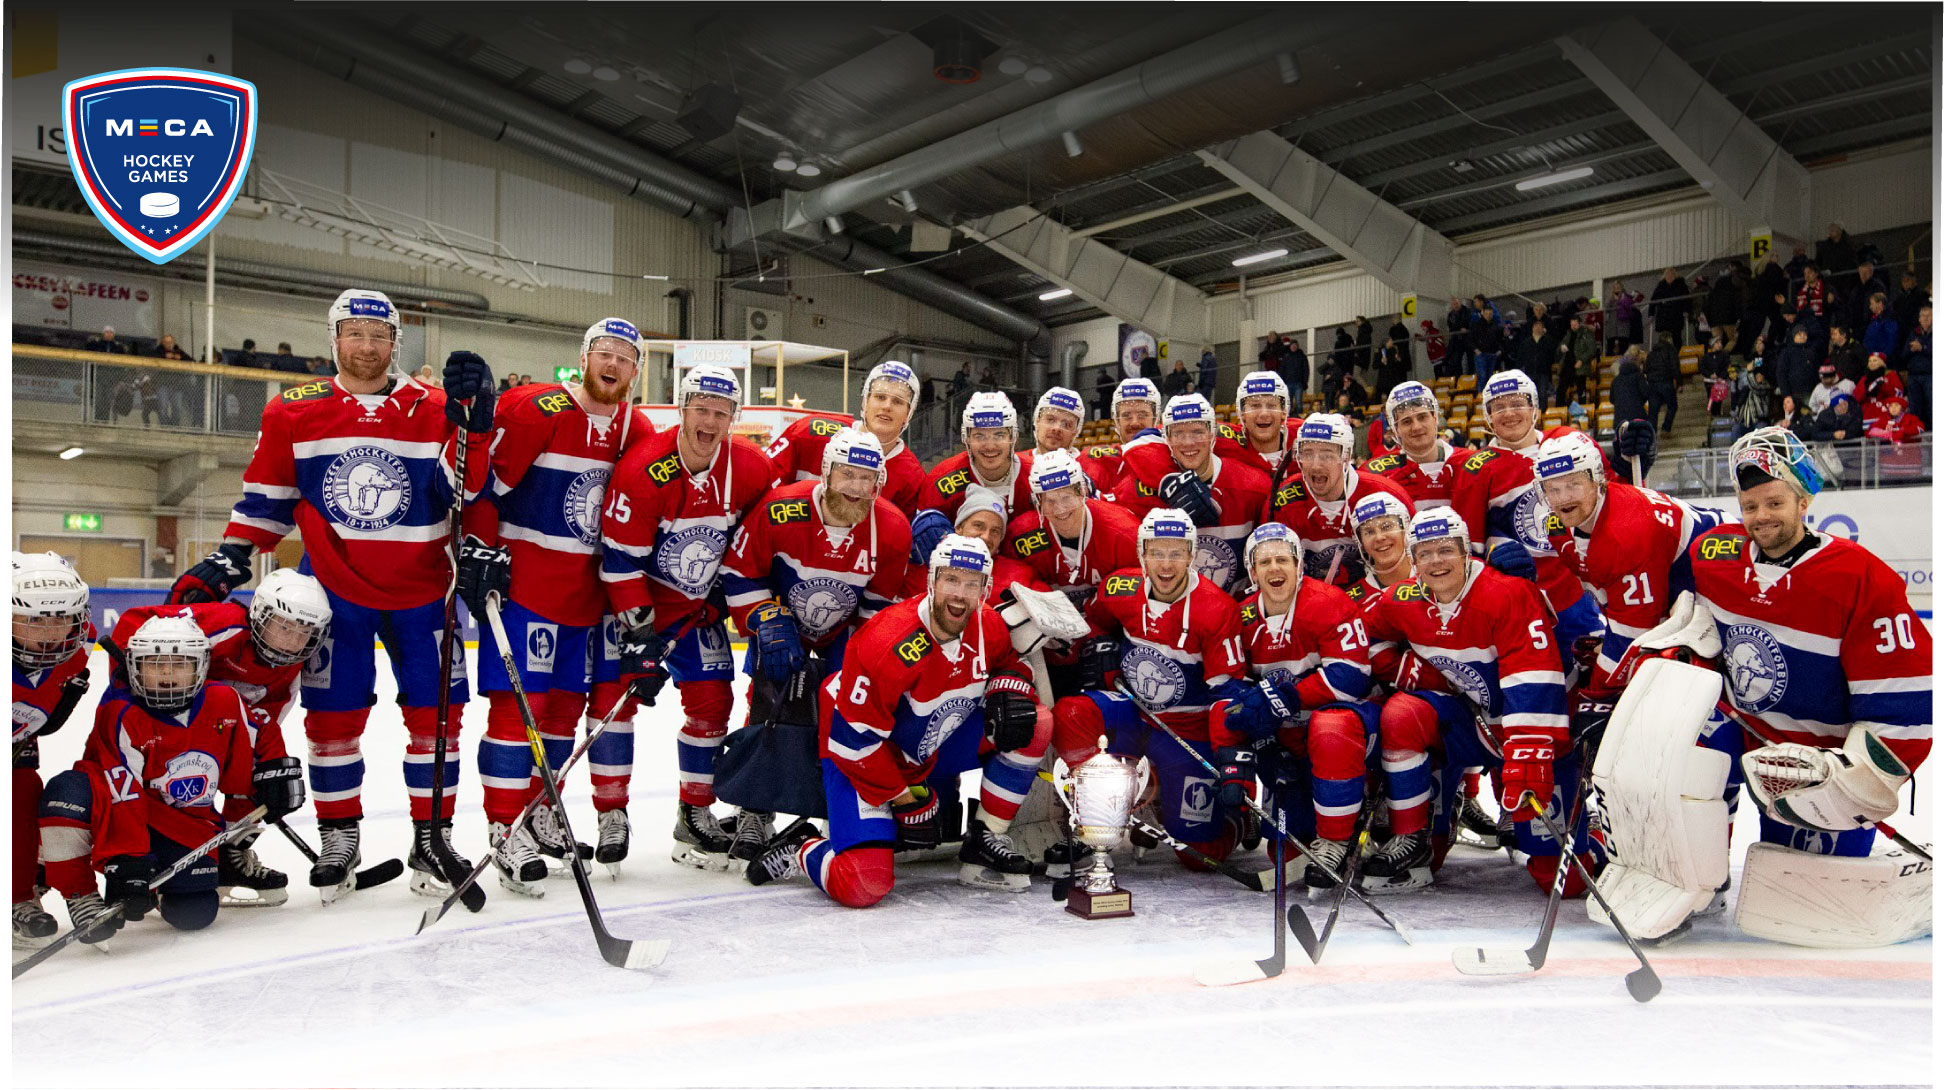 Norge vant MECA Hockey Games 2018